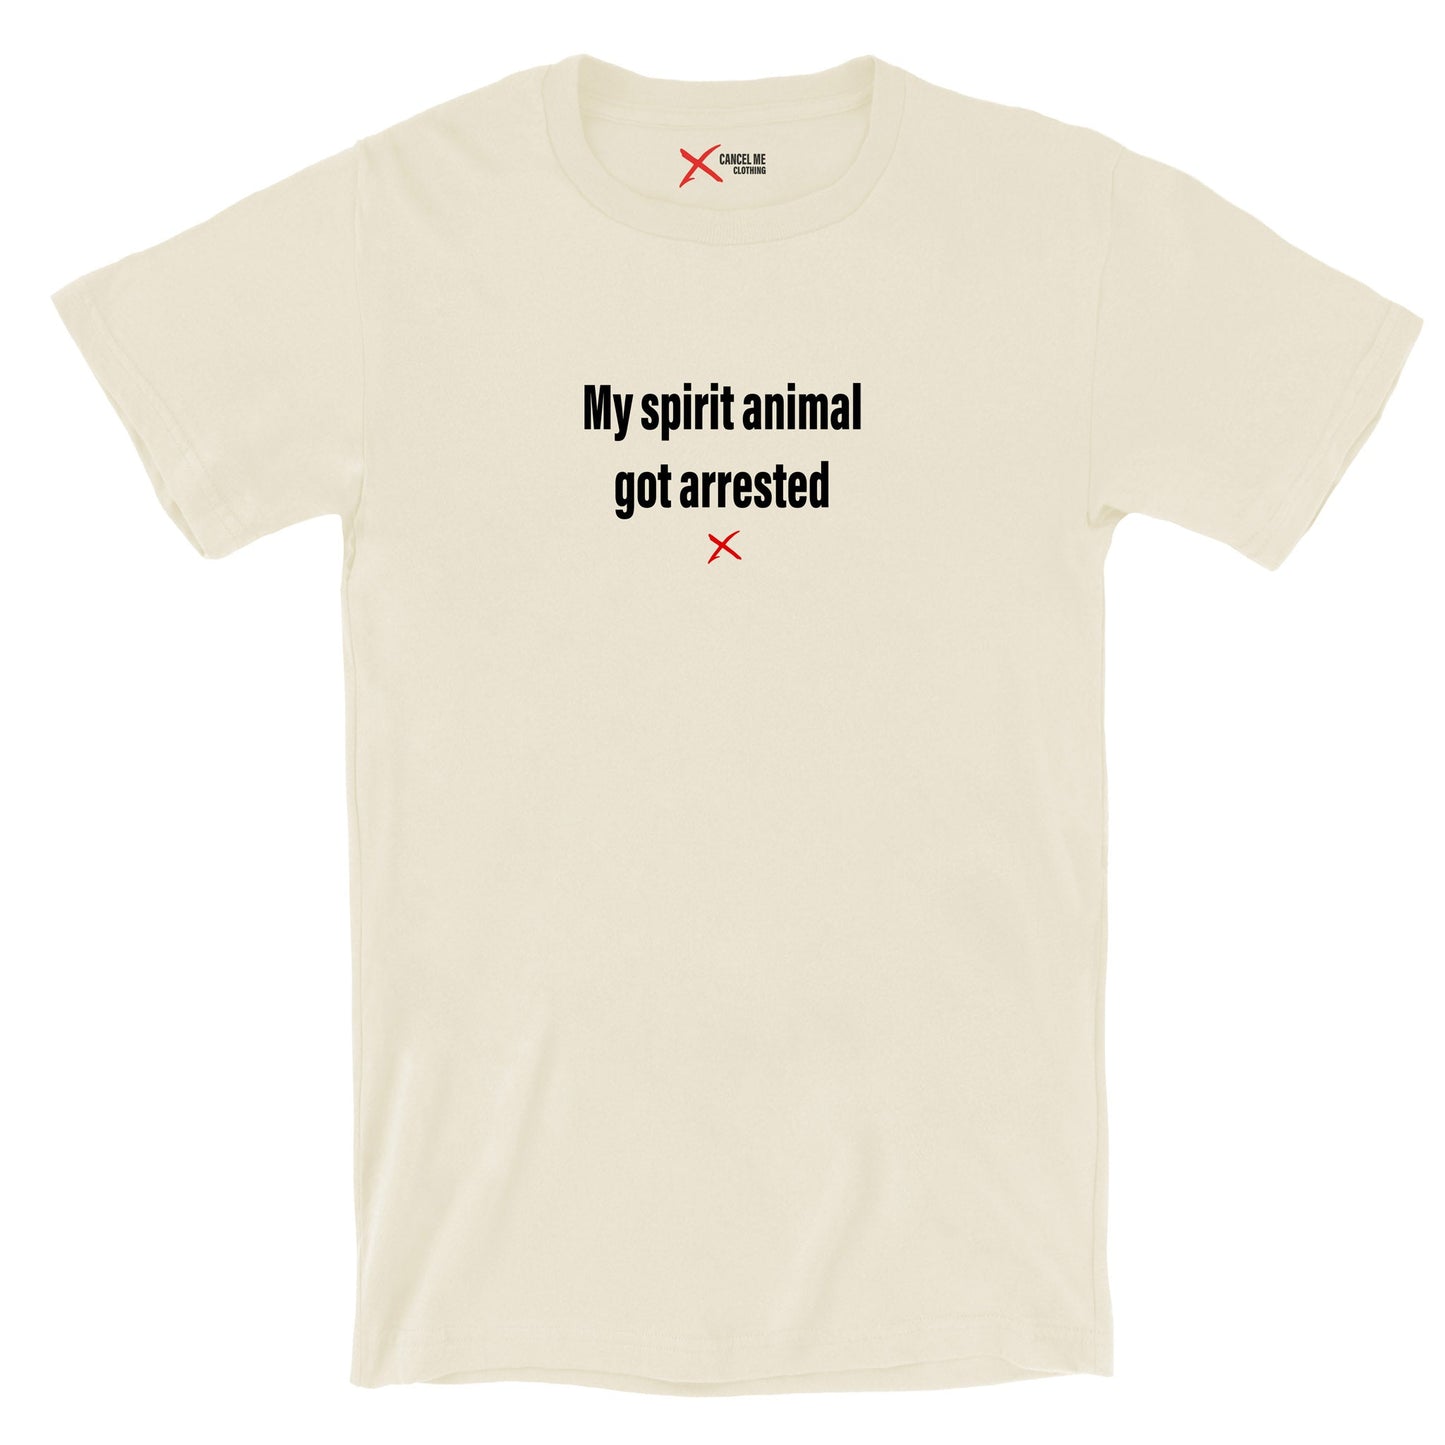 My spirit animal got arrested - Shirt